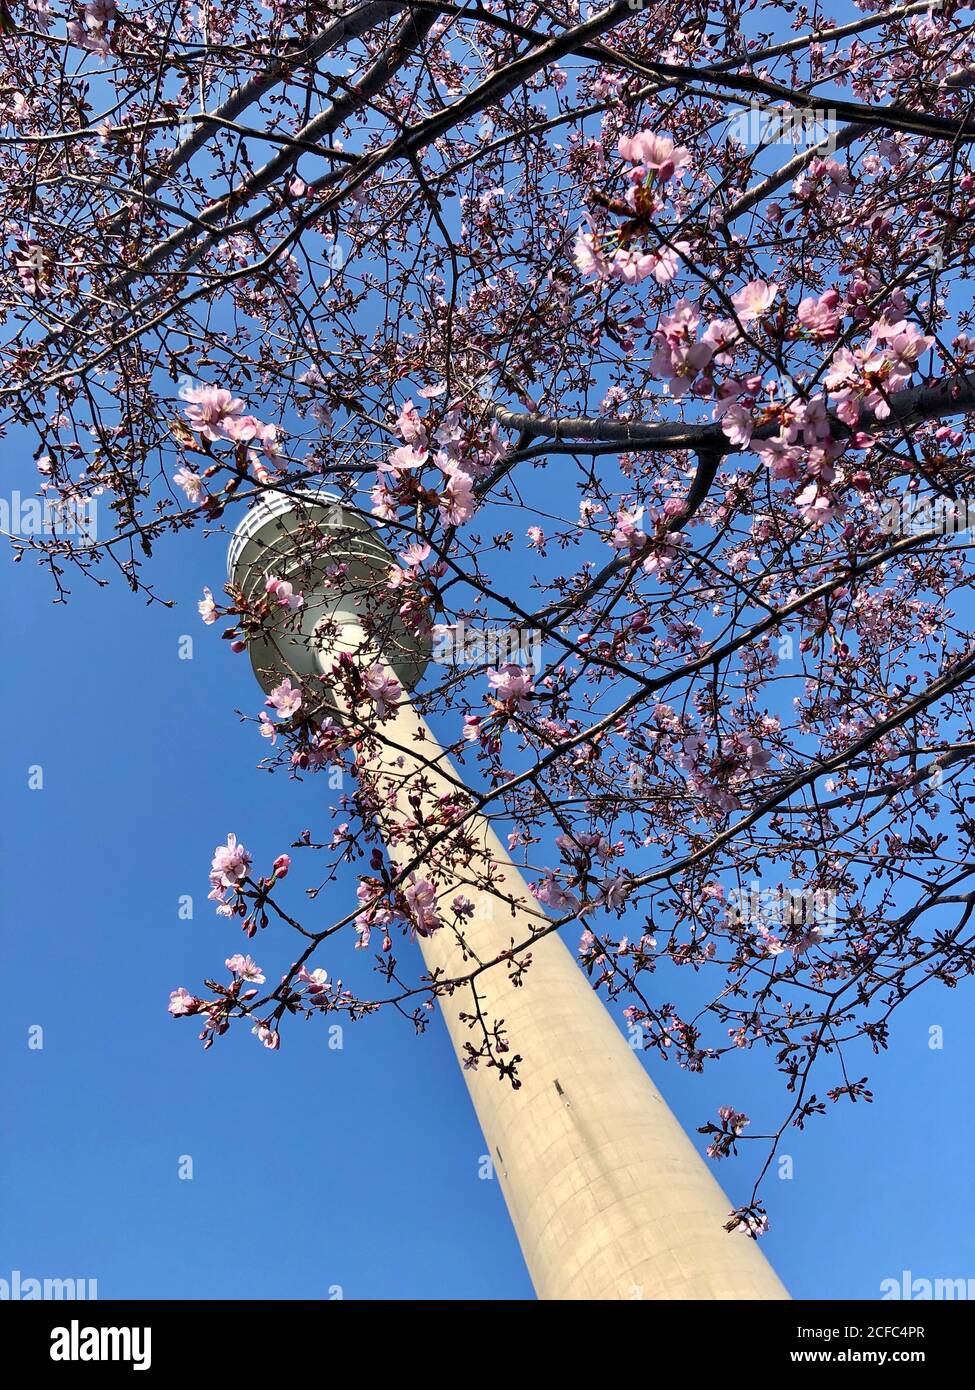 Olympiaturm Munich Olympiapark cherry blossom Stock Photo